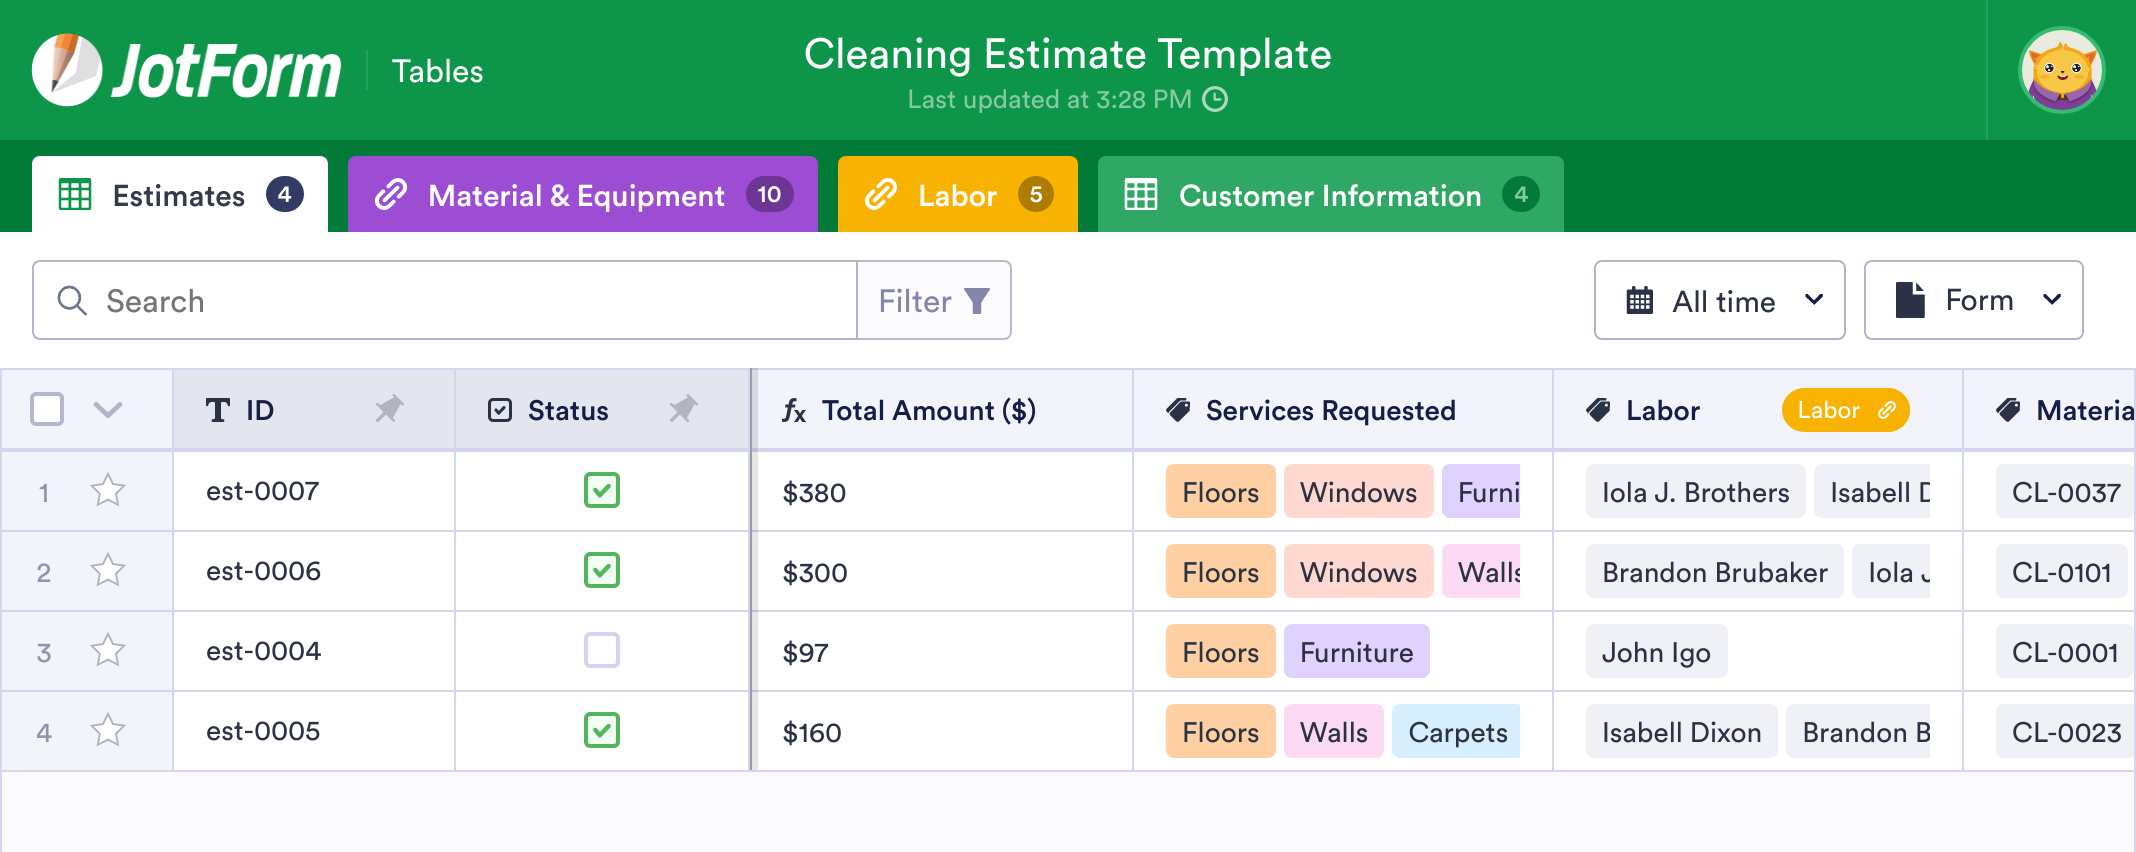 Cleaning Estimate Template | JotForm Tables